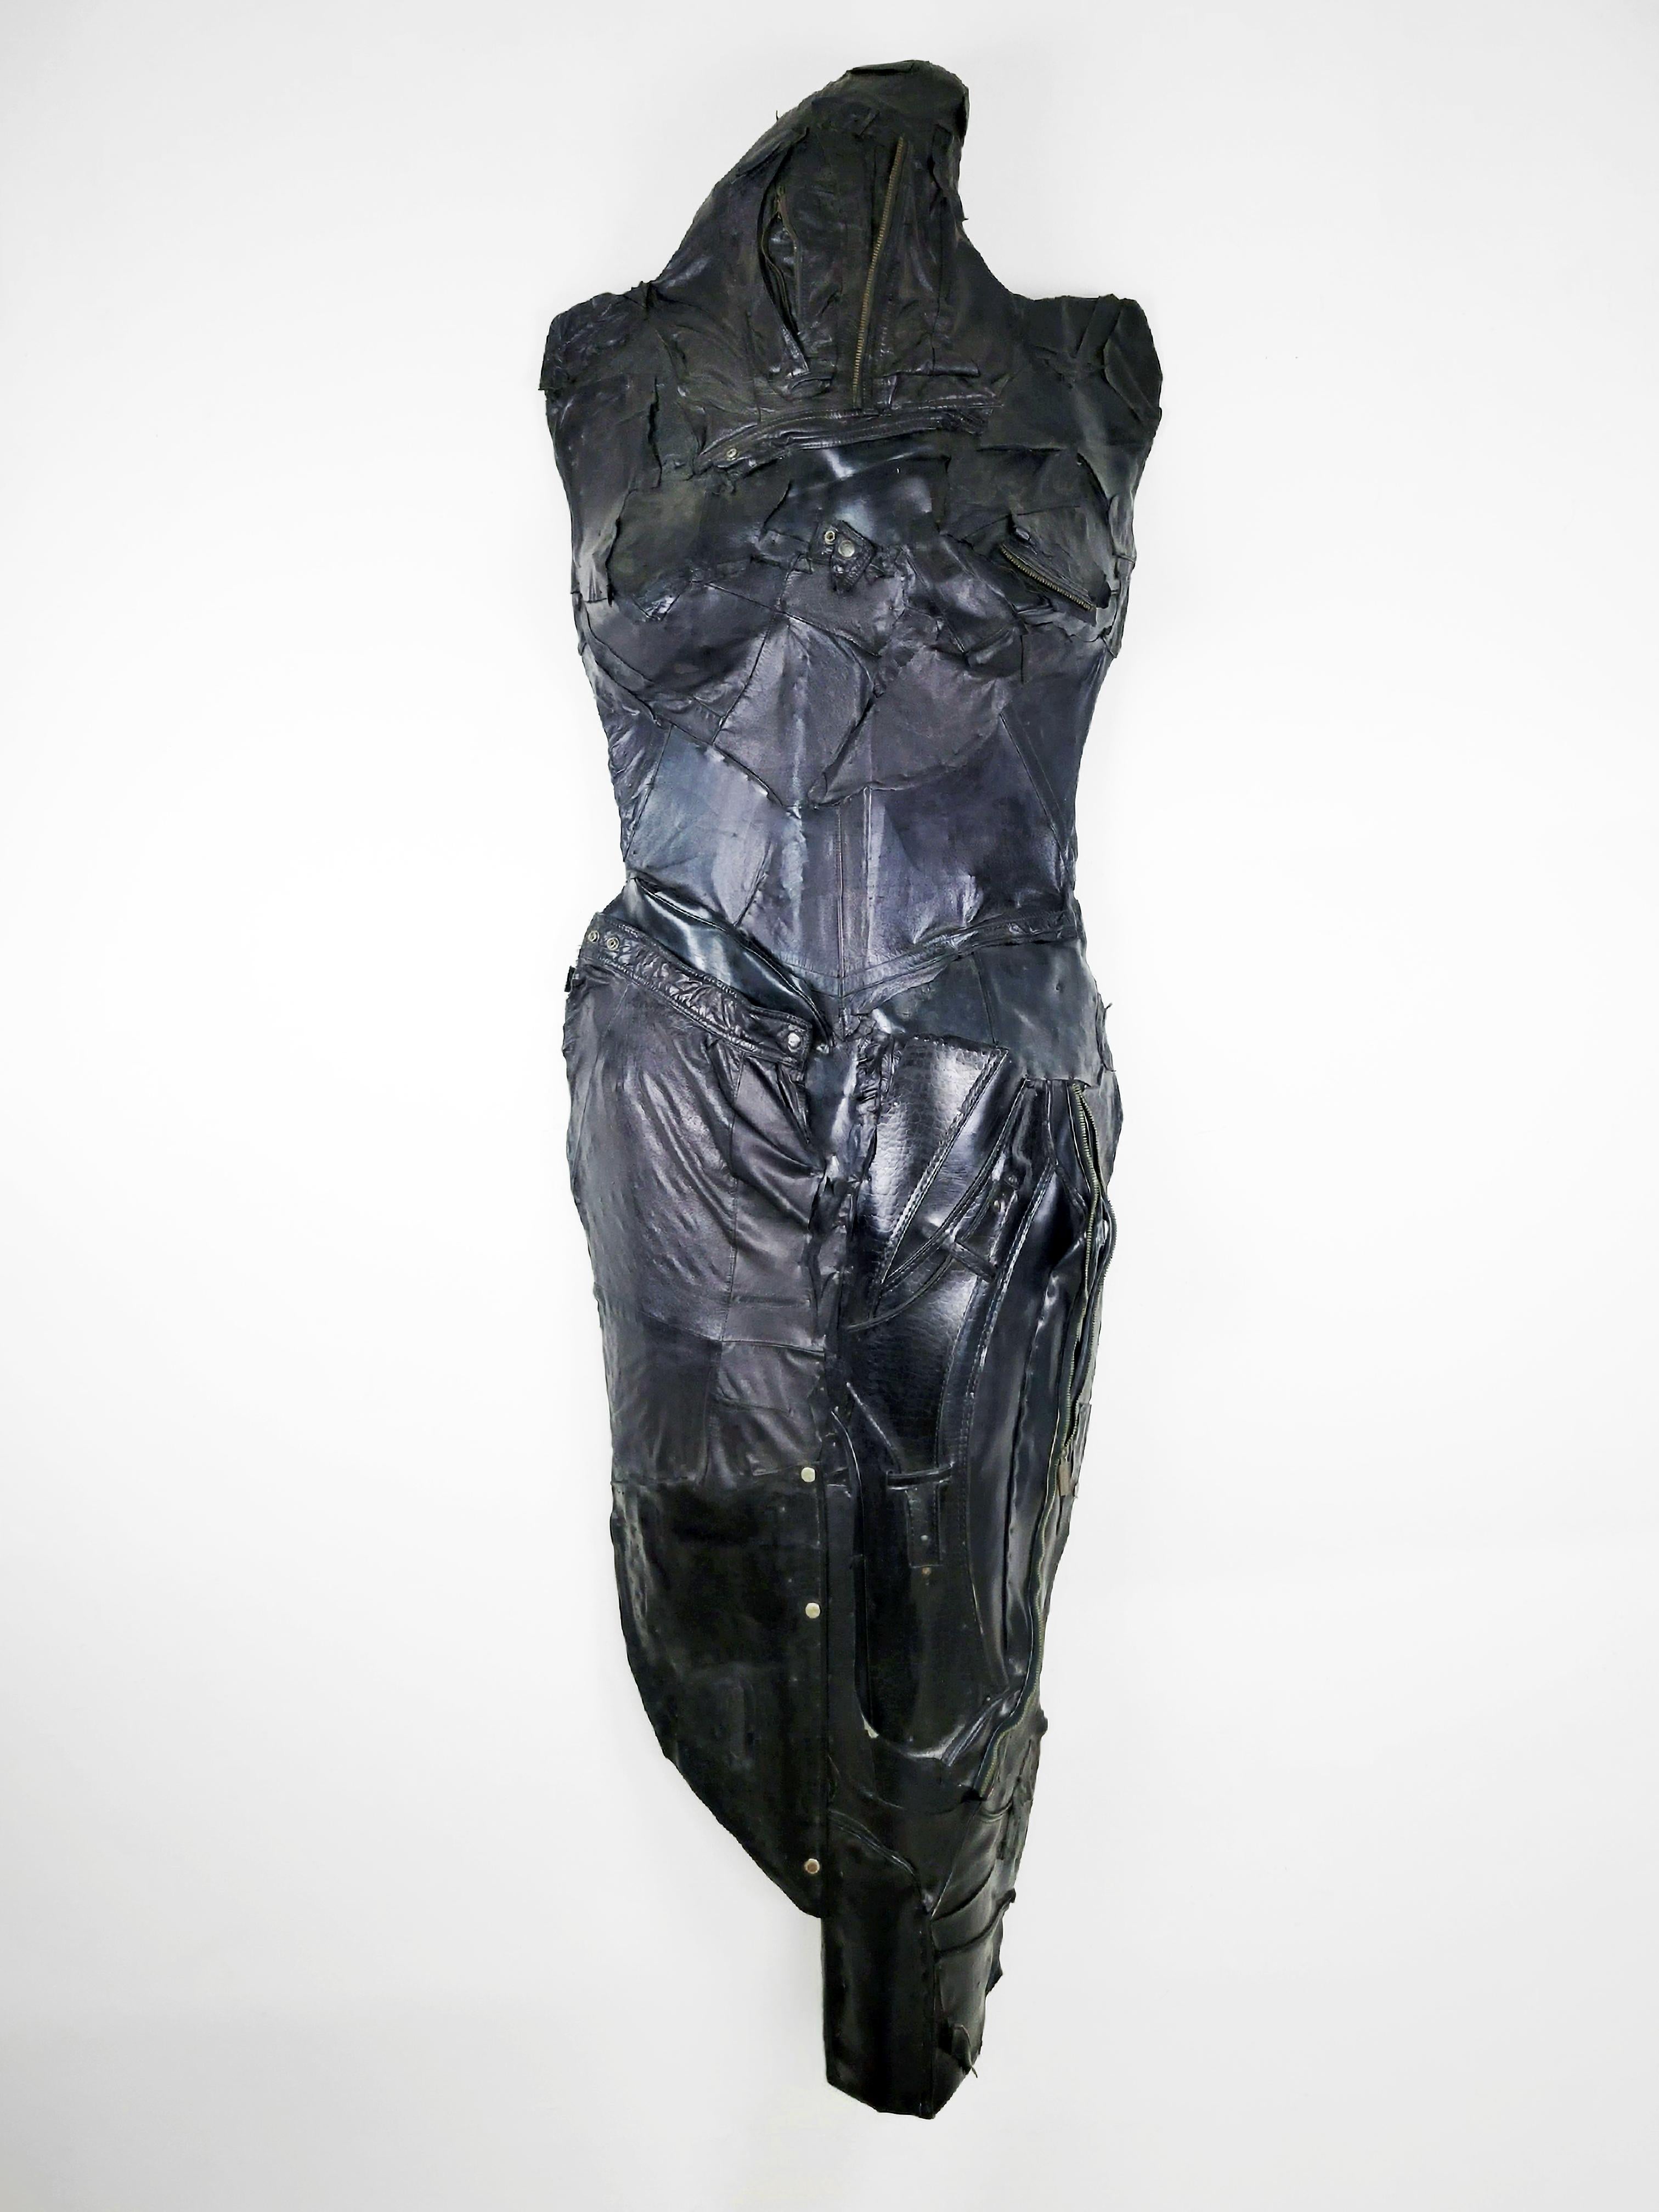 Linda Stein Figurative Sculpture - Feminist Contemporary Black Leather Metal Figurative Wall Sculpture Sentinel 689